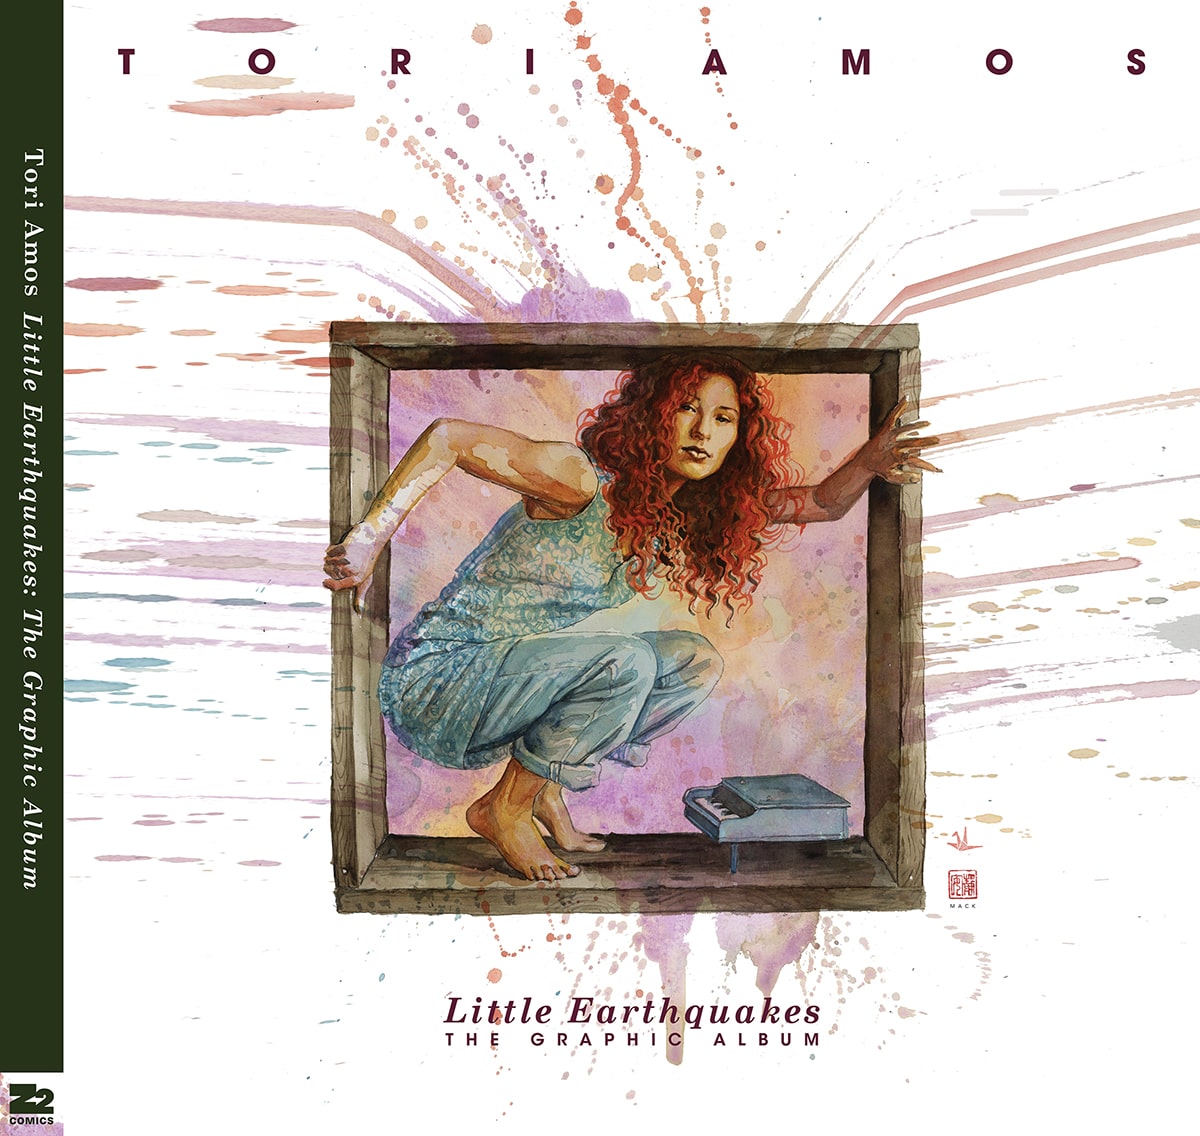 Z2 to publish Tori Amos' sequel graphic novel 'Little Earthquakes: The Graphic Album'